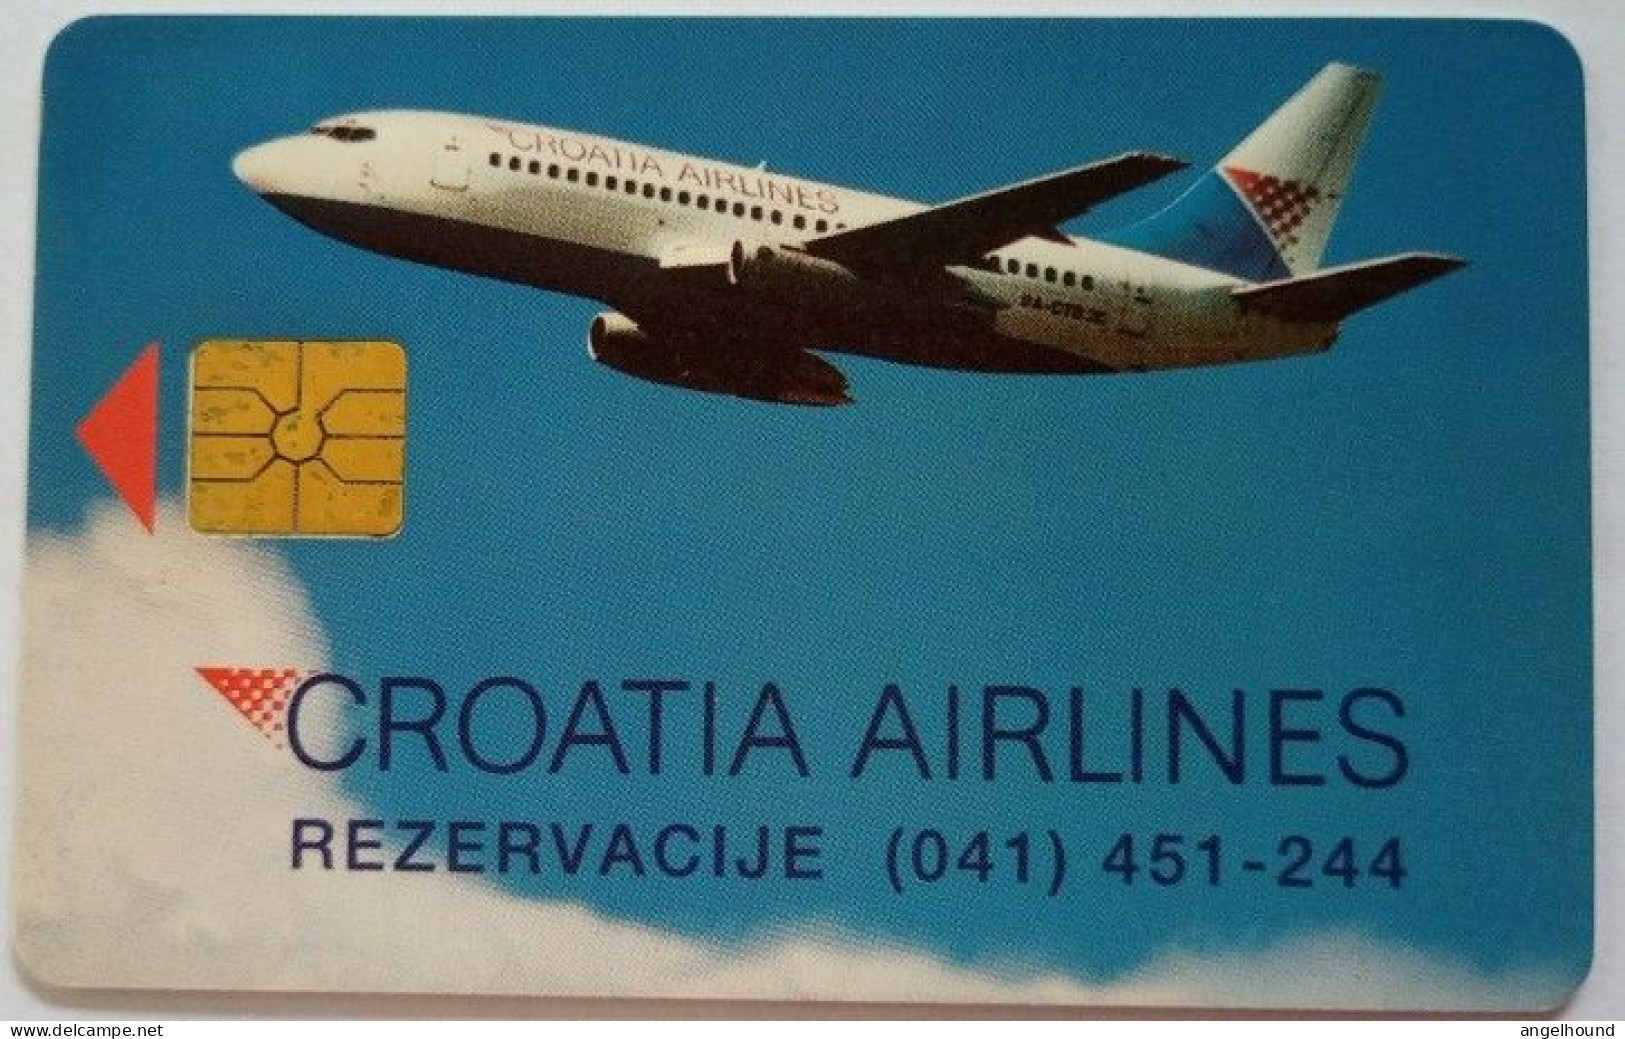 Croatia 200 Units Chip Card - Croatia Airlines - Croatia